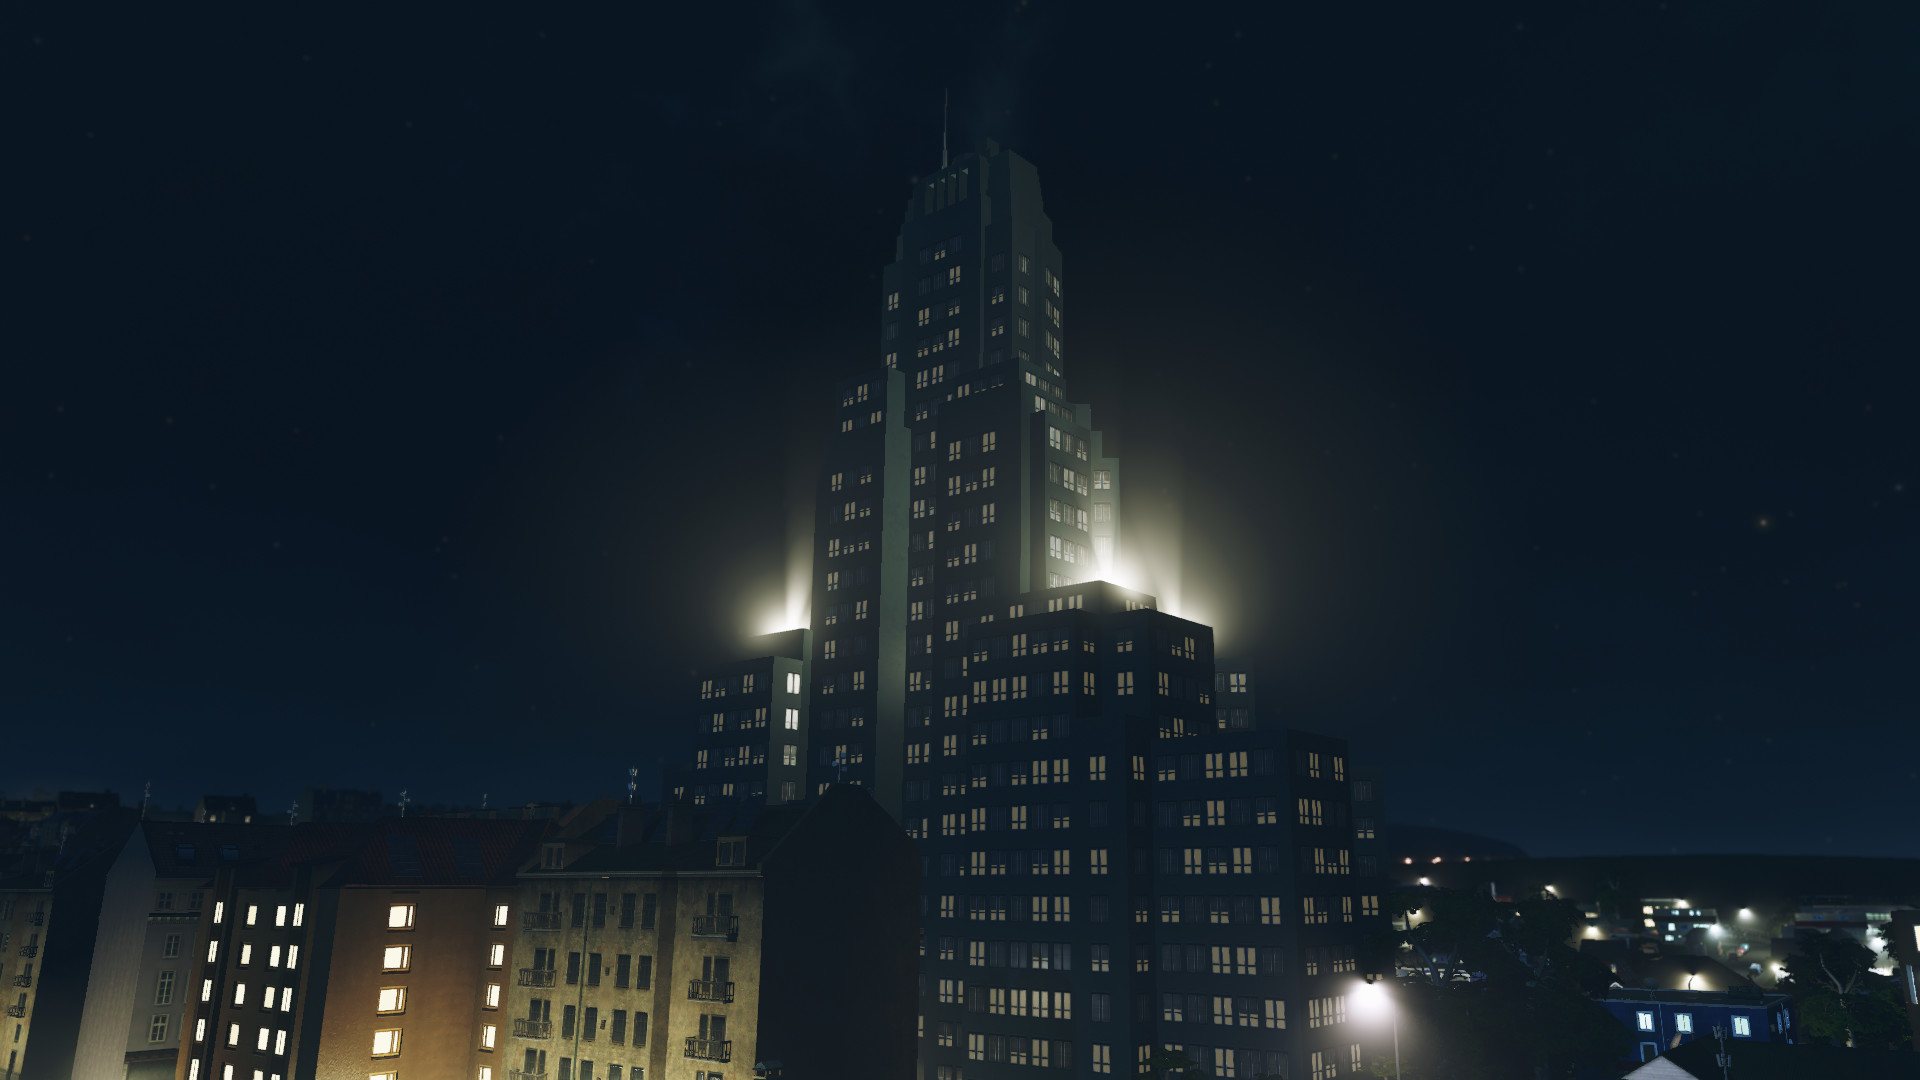 Cities: Skylines - Content Creator Pack: Art Deco DLC RU VPN Required Steam CD Key